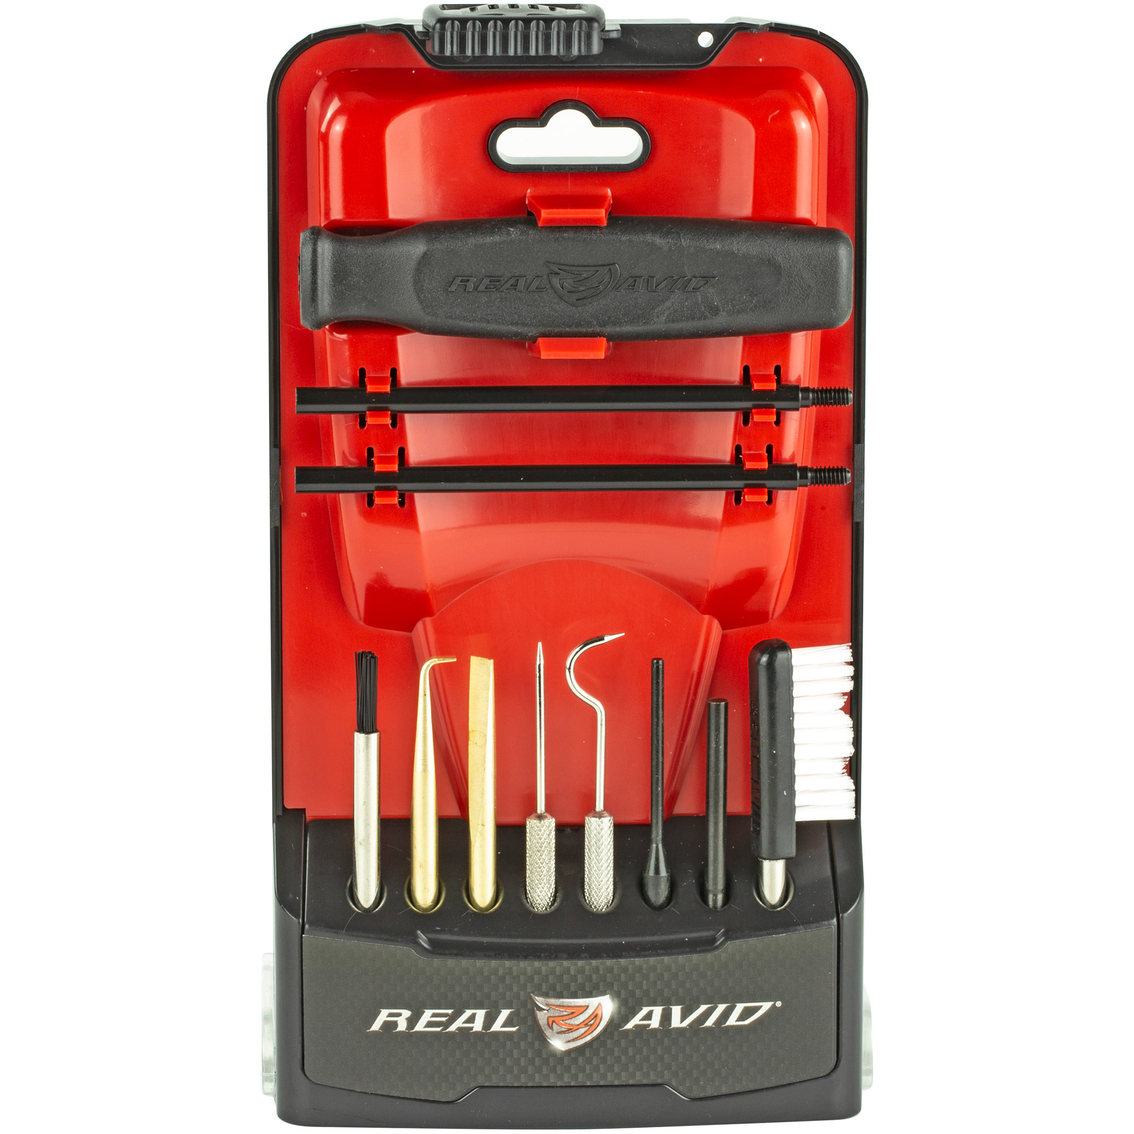 Real Avid Gun Boss Pro Cleaning Kit Precision Tools - Image 2 of 2